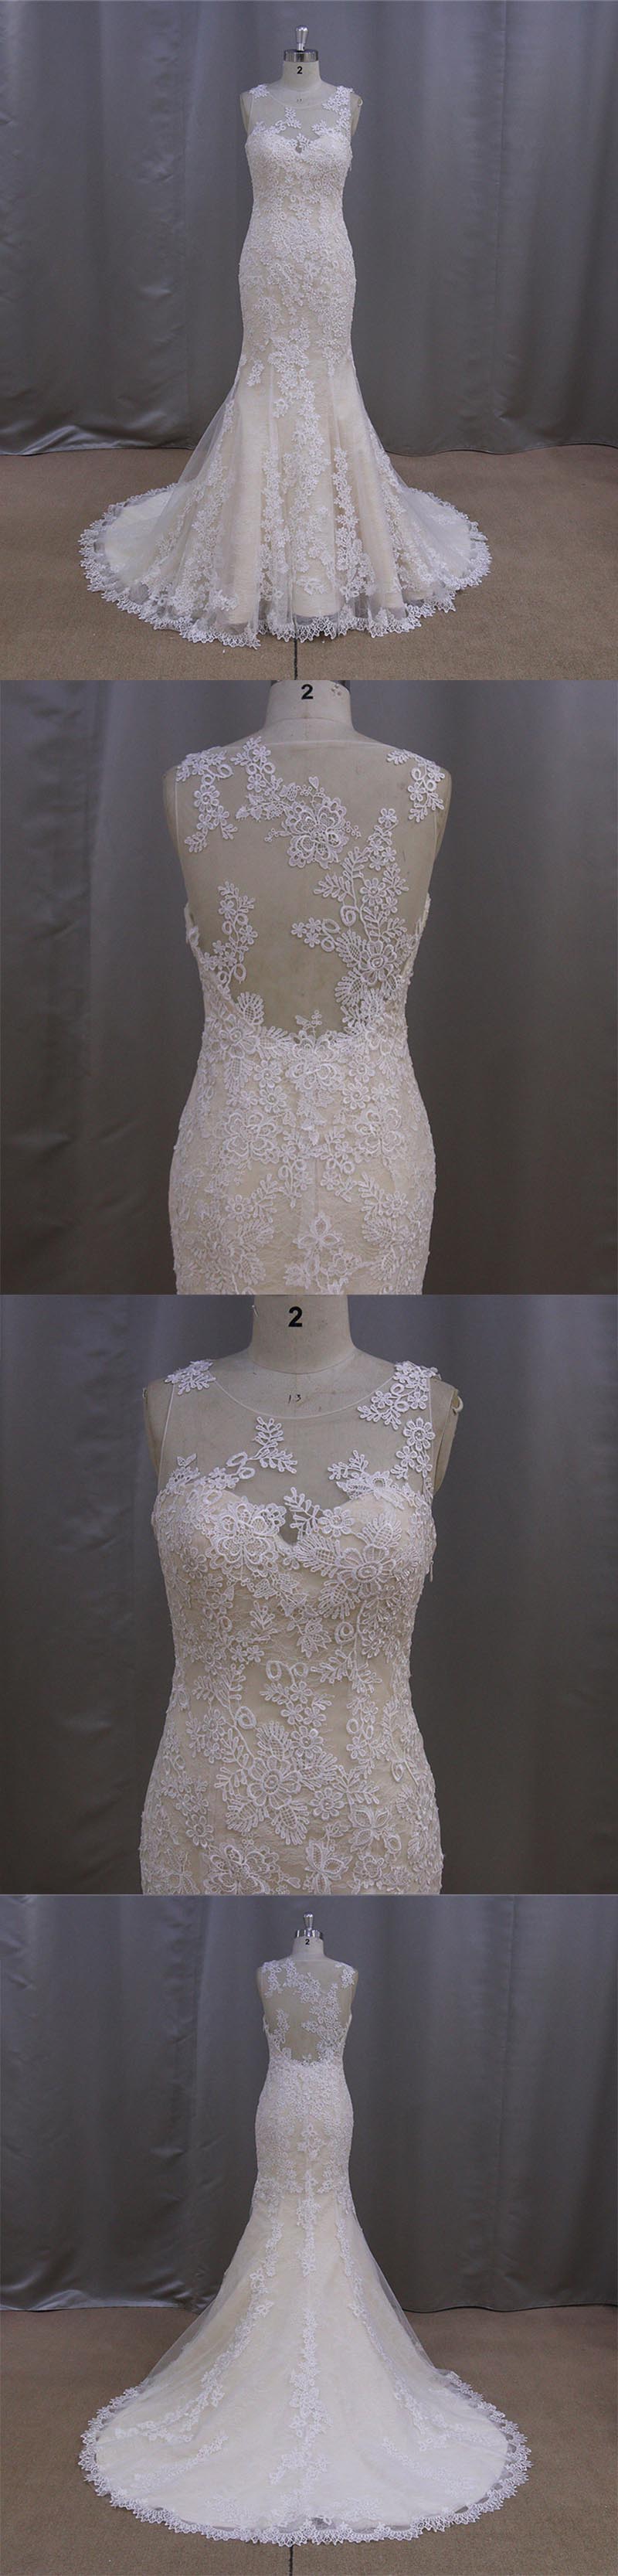 Gorgeous Dropped Lace Wedding Dress Patterns